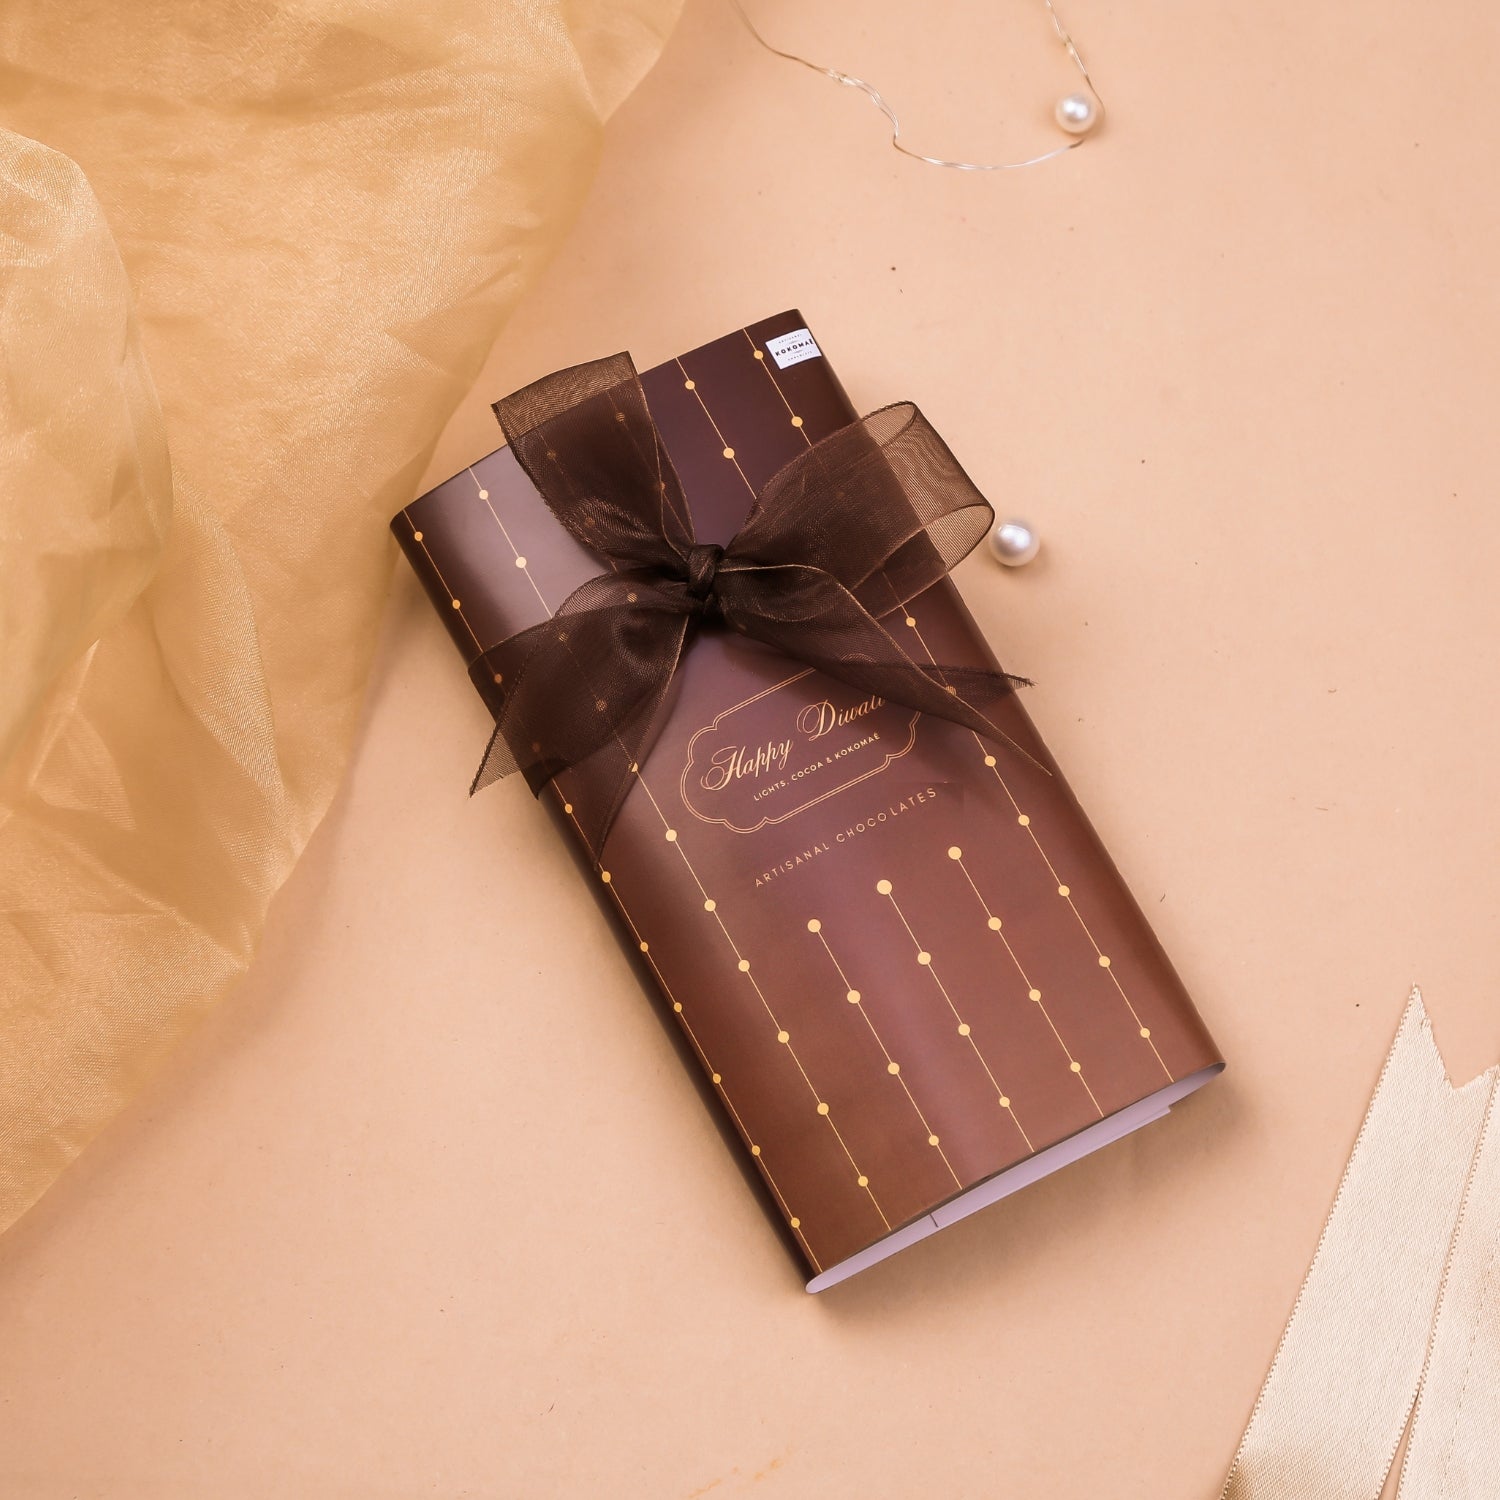 Kokomaē Premium Diwali Chocolate Offering : 72% Dark with Coffee & 75% Dark with Sea Salt & a Candle